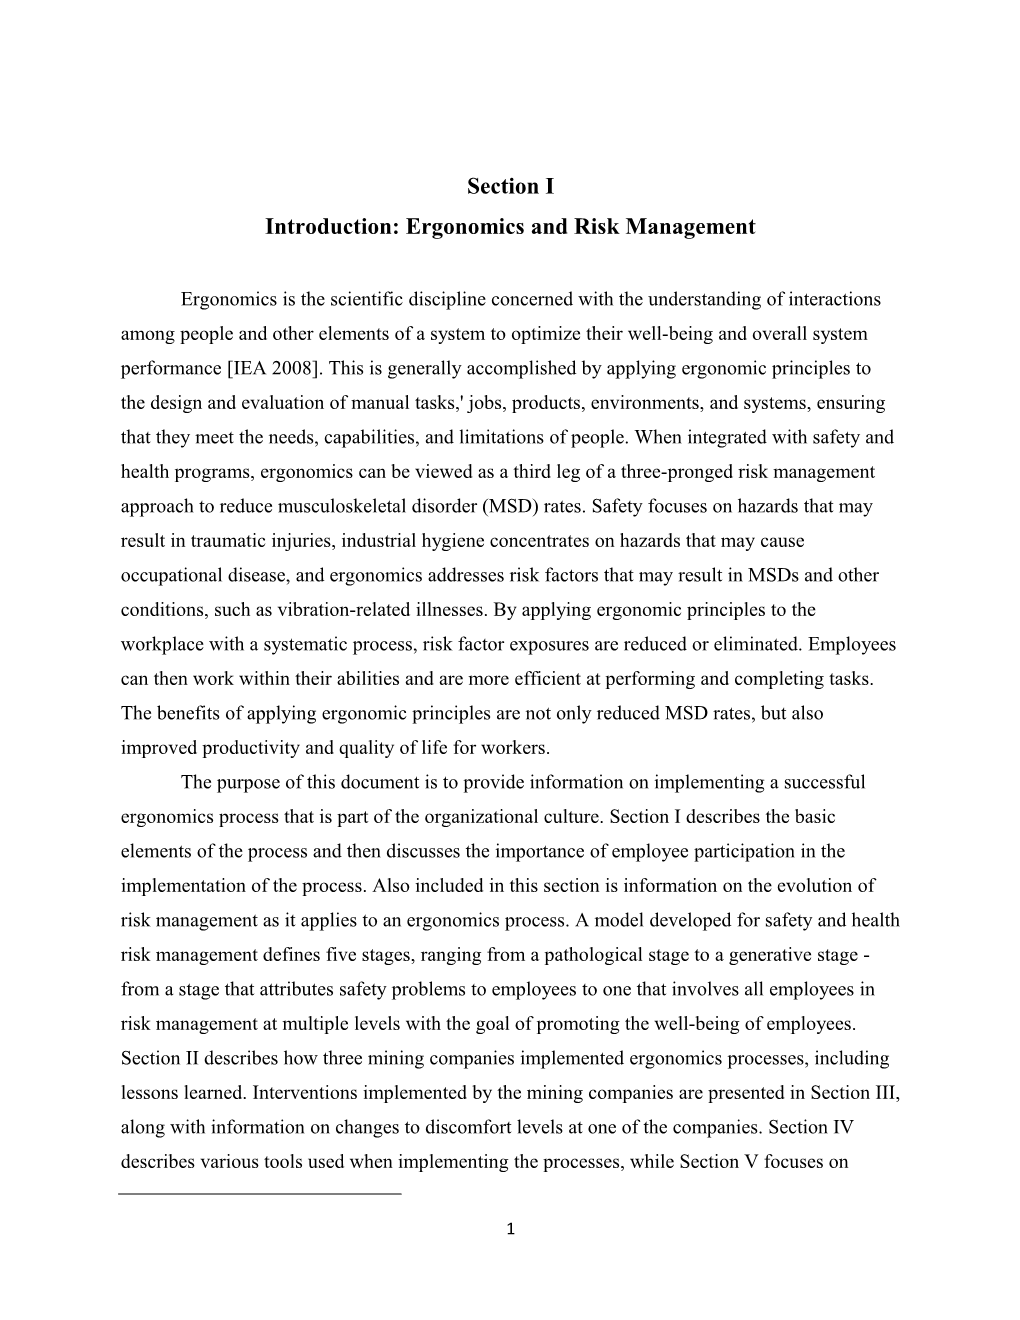 Introduction: Ergonomics and Risk Management